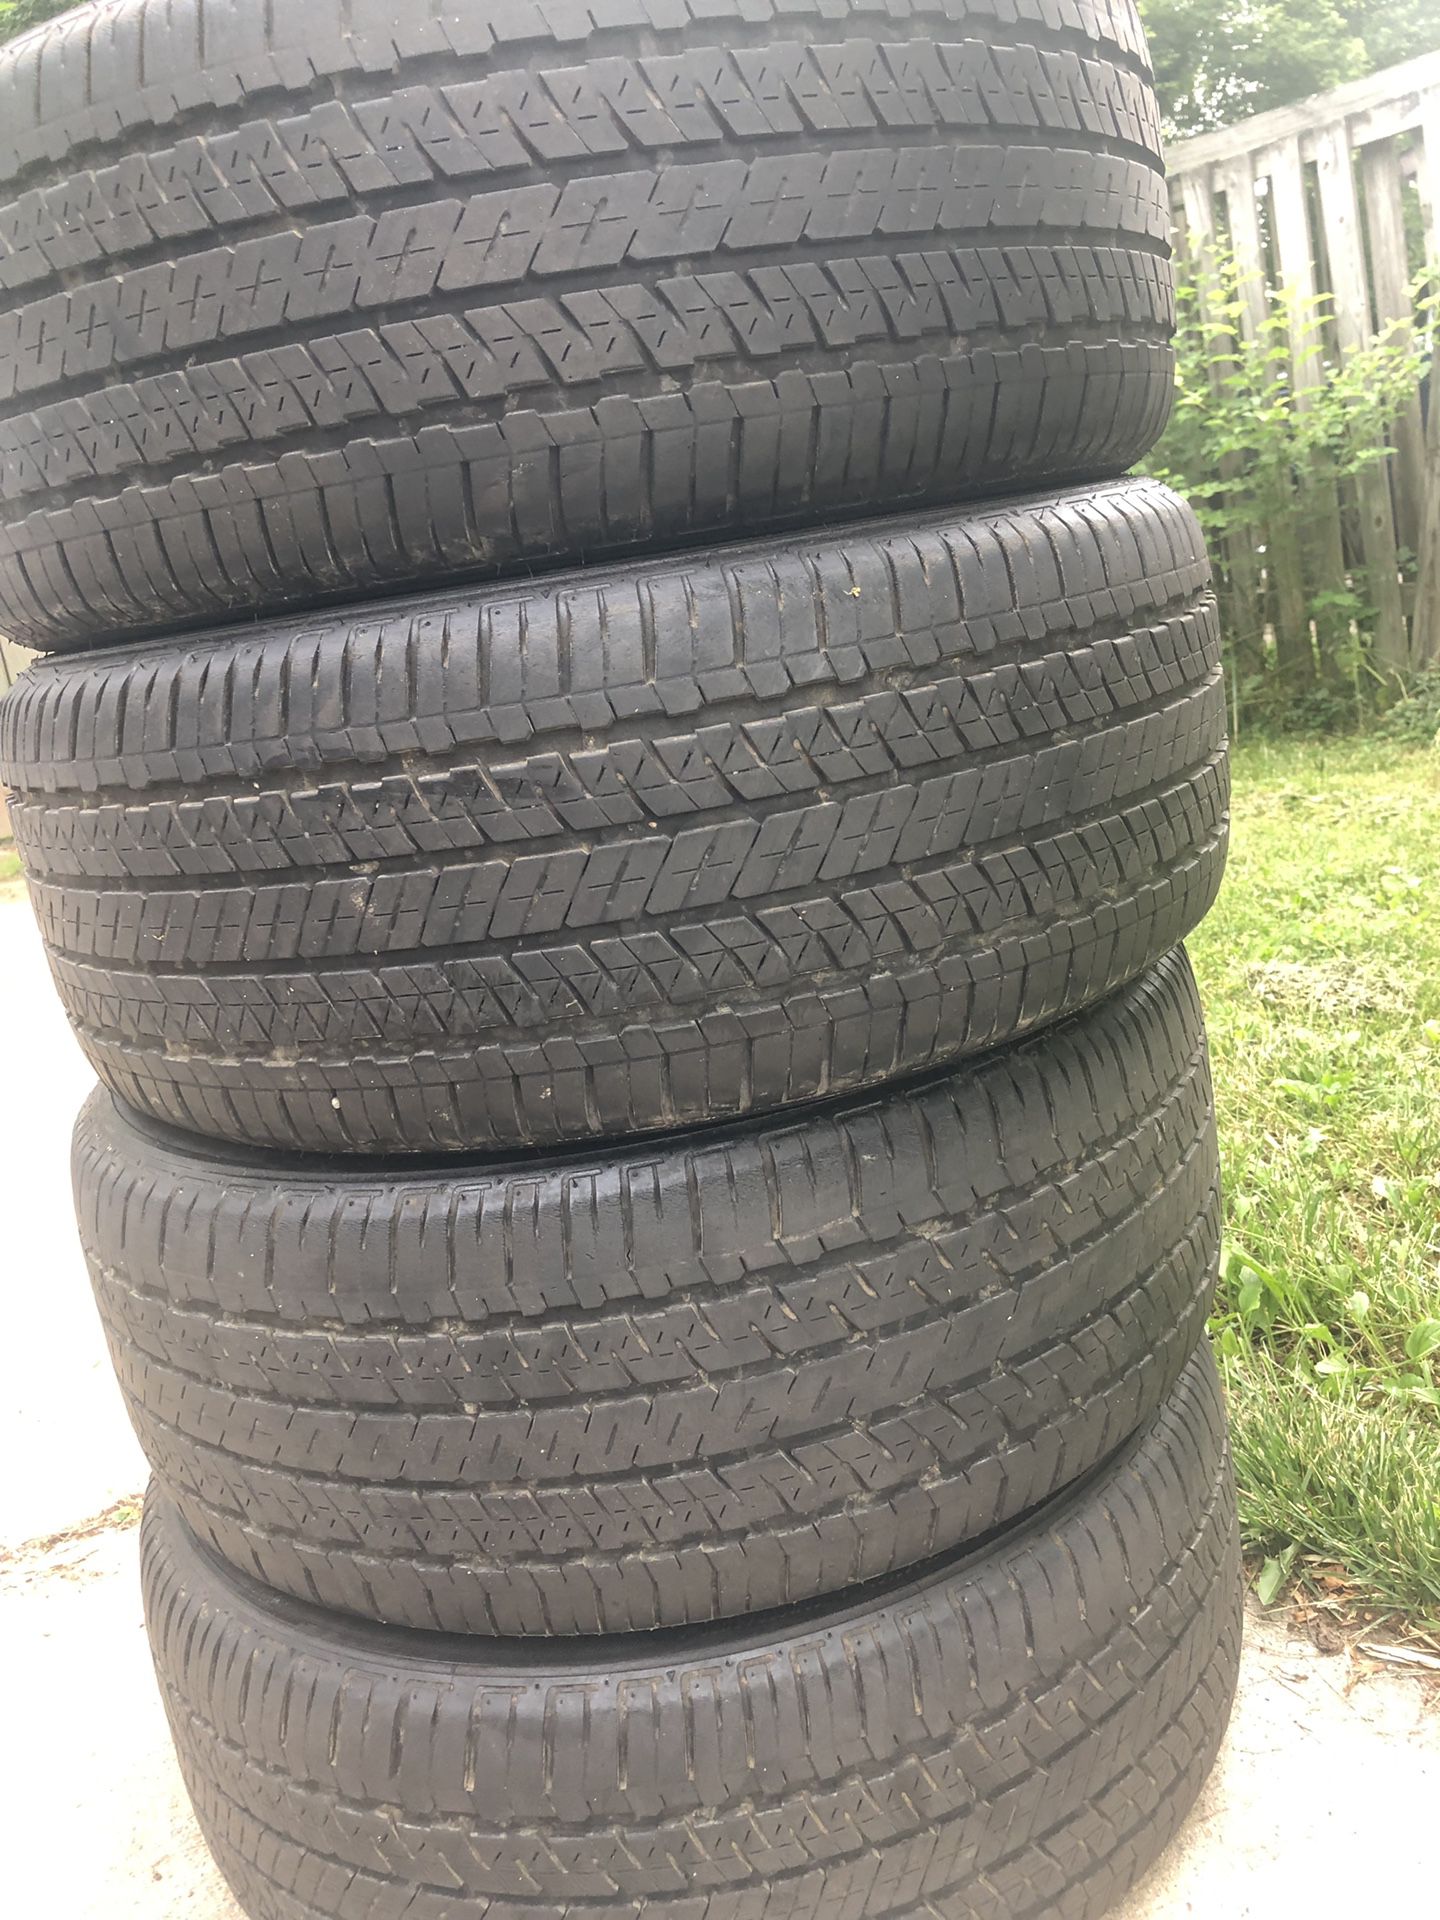 4 good use tires Firestone 215/45/17